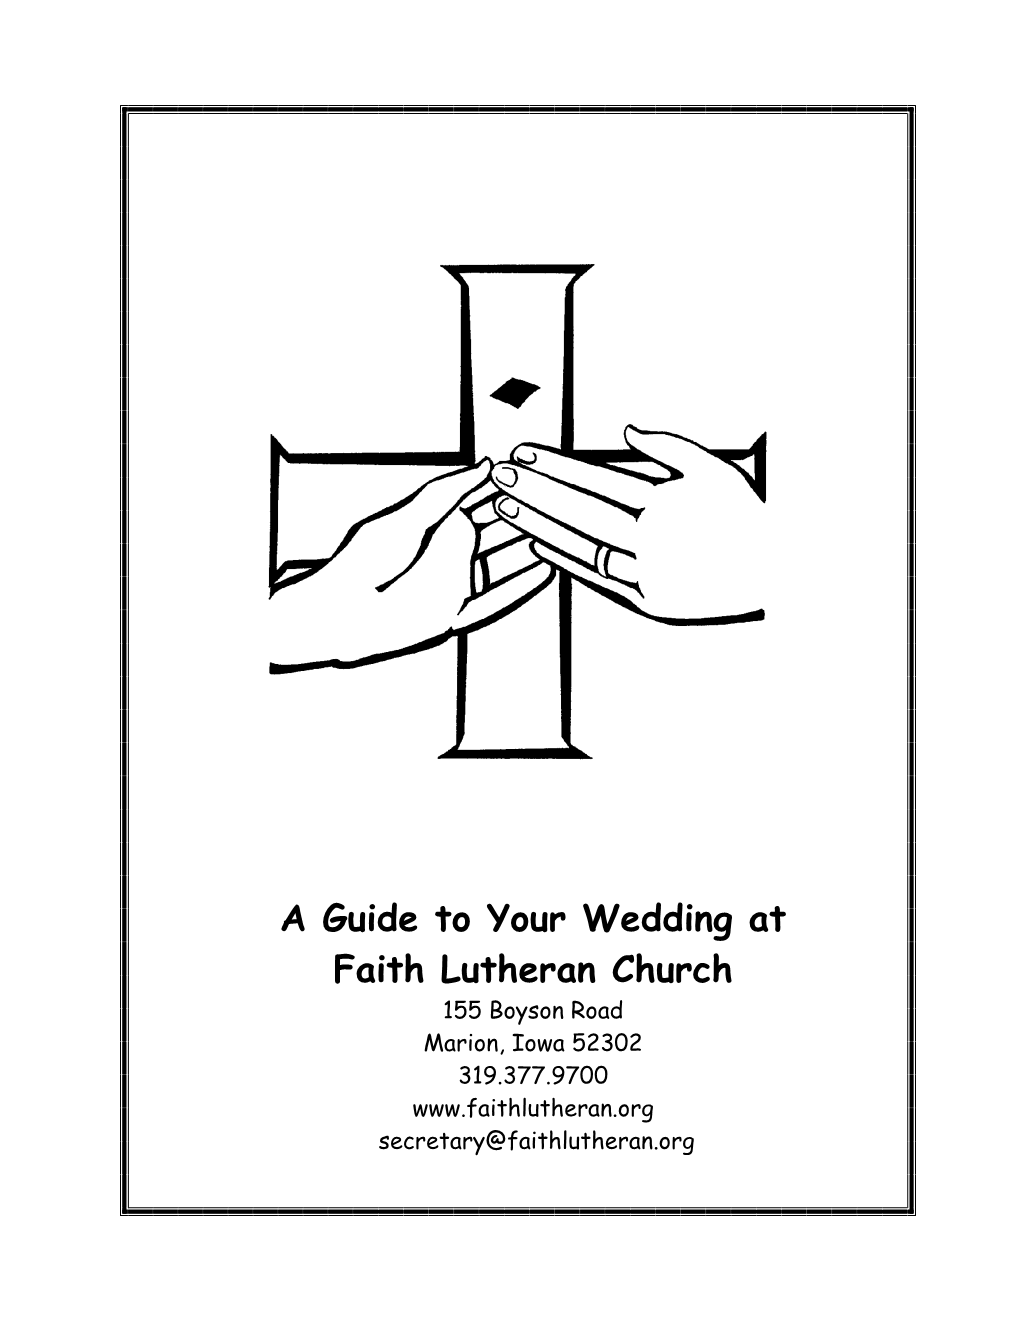 A Guide to Your Wedding at Faith Lutheran Church 155 Boyson Road Marion, Iowa 52302 319.377.9700 Secretary@Faithlutheran.Org